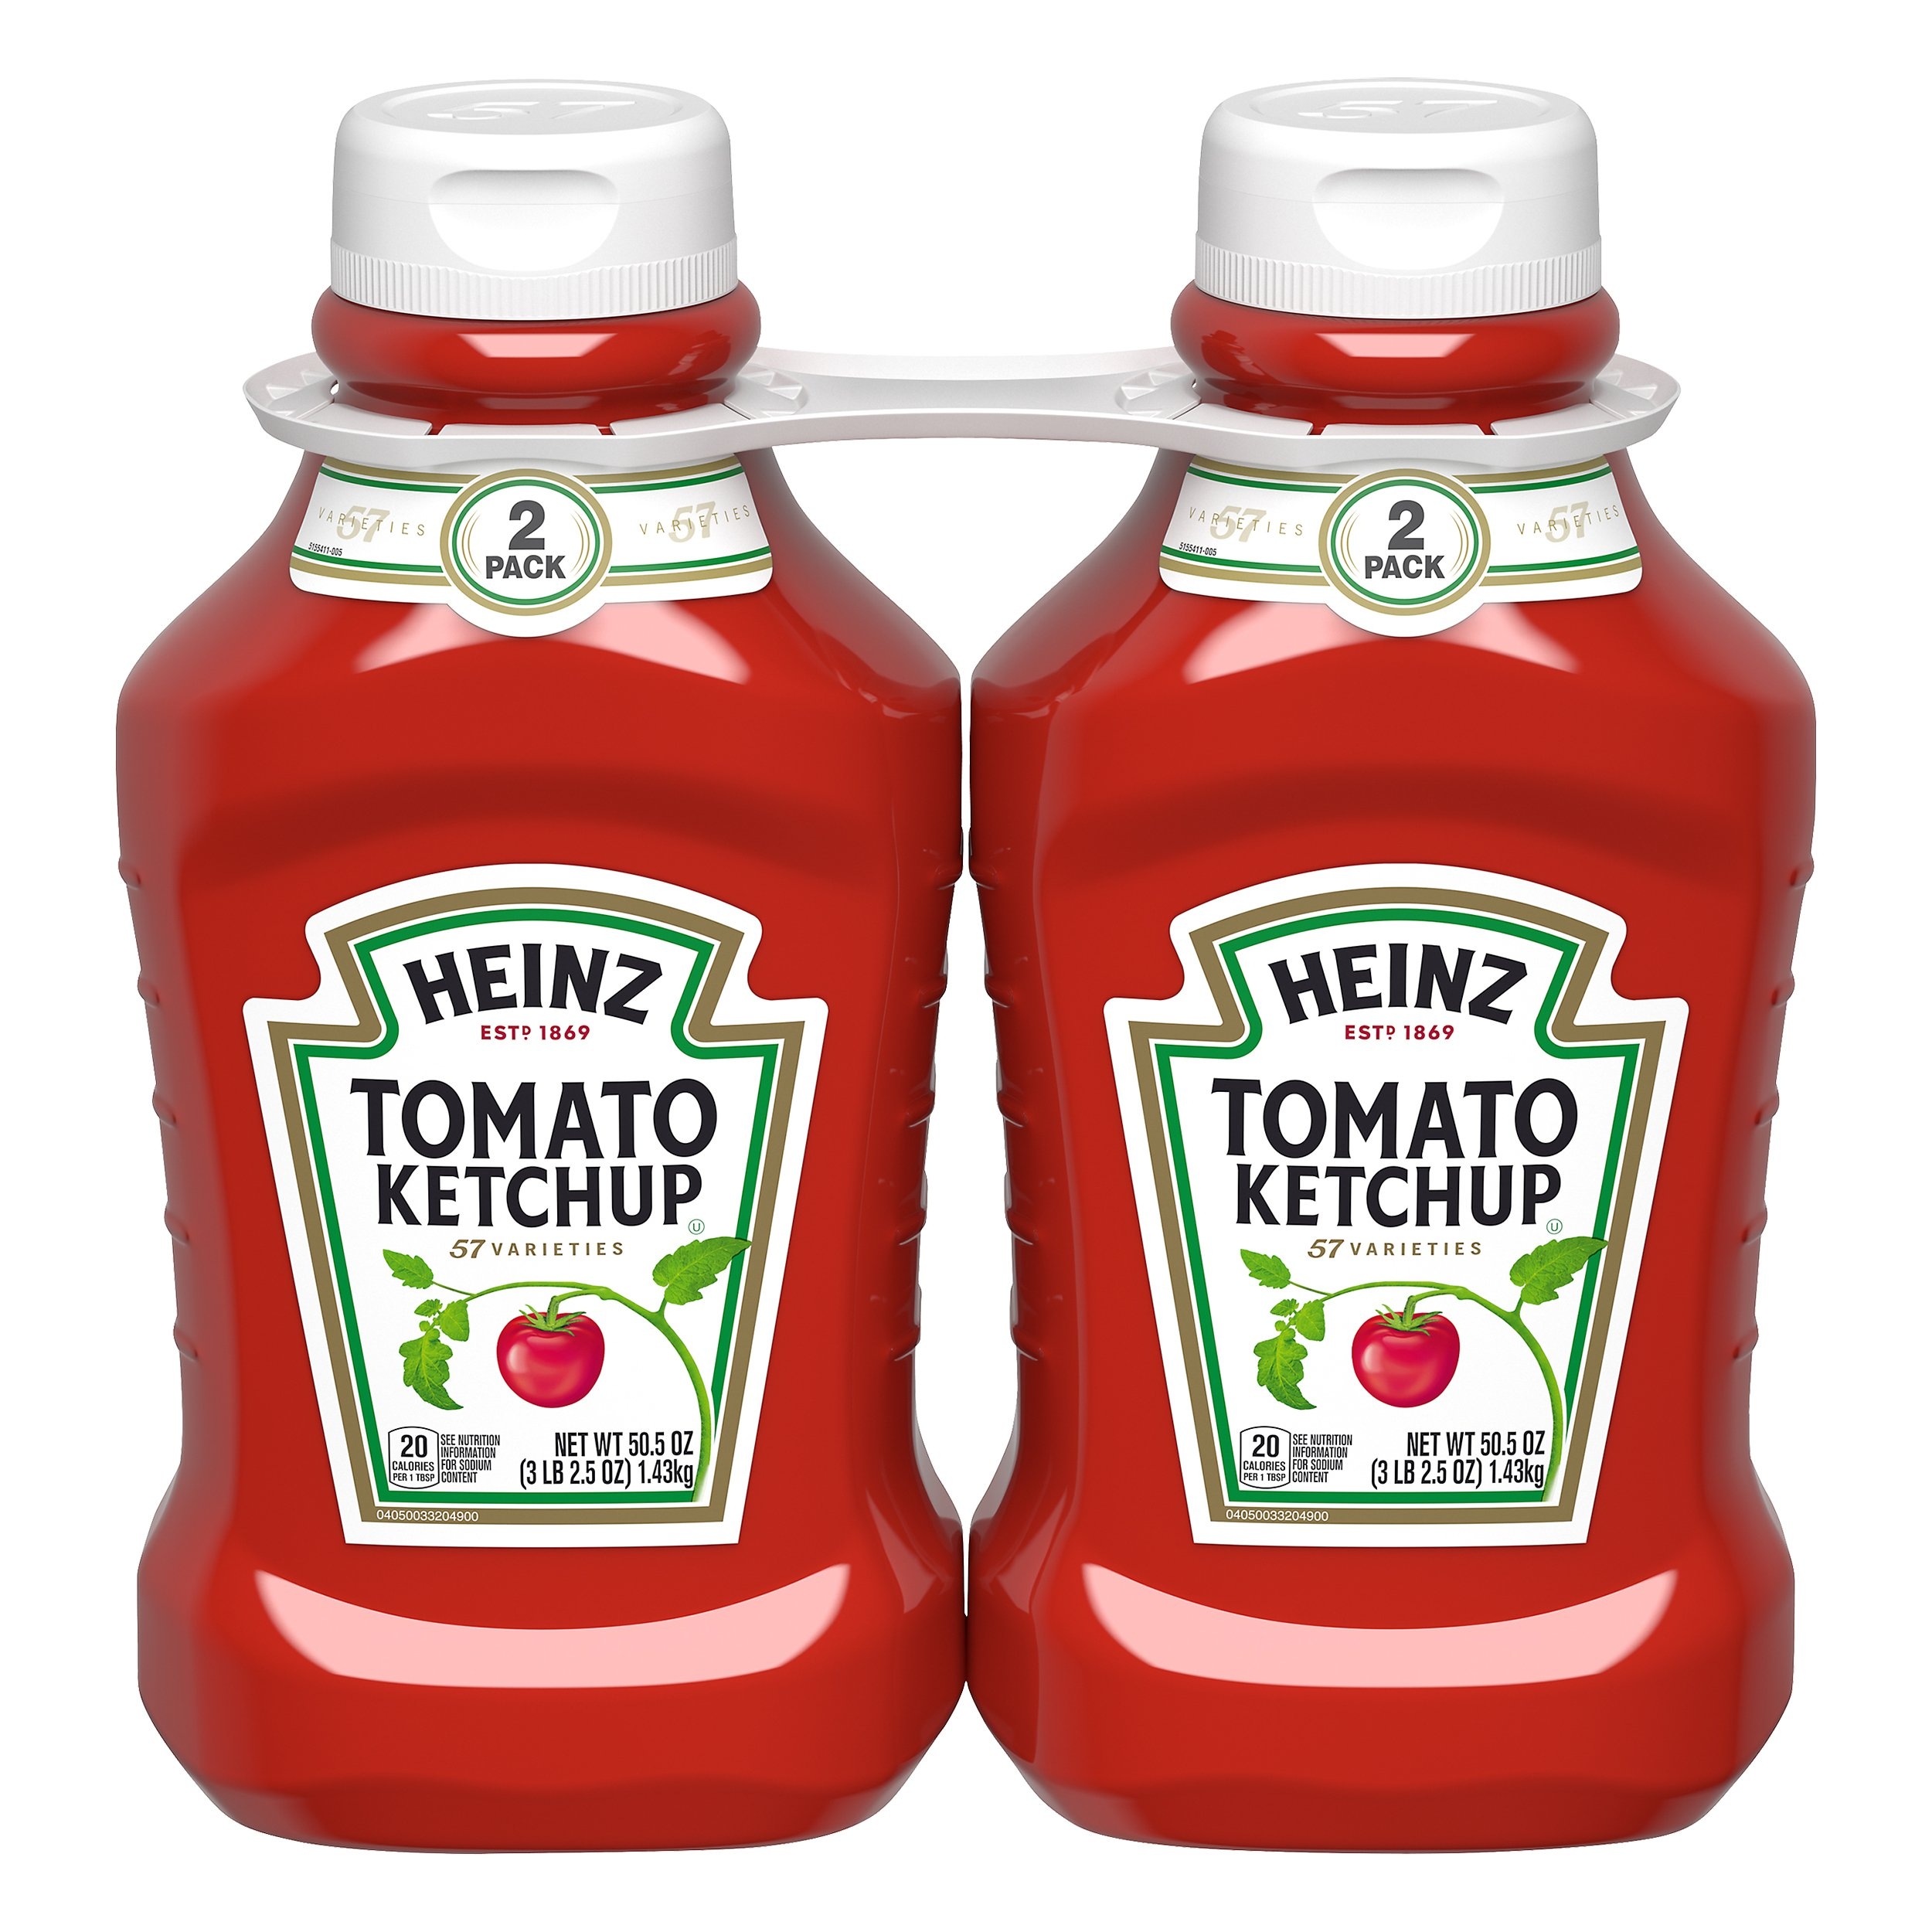 Печенье кетчуп. Heinz 1869. Хайнц кетчуп кетчуп. Heinz Tomato Ketchup Organic. Heinz 1869 года.